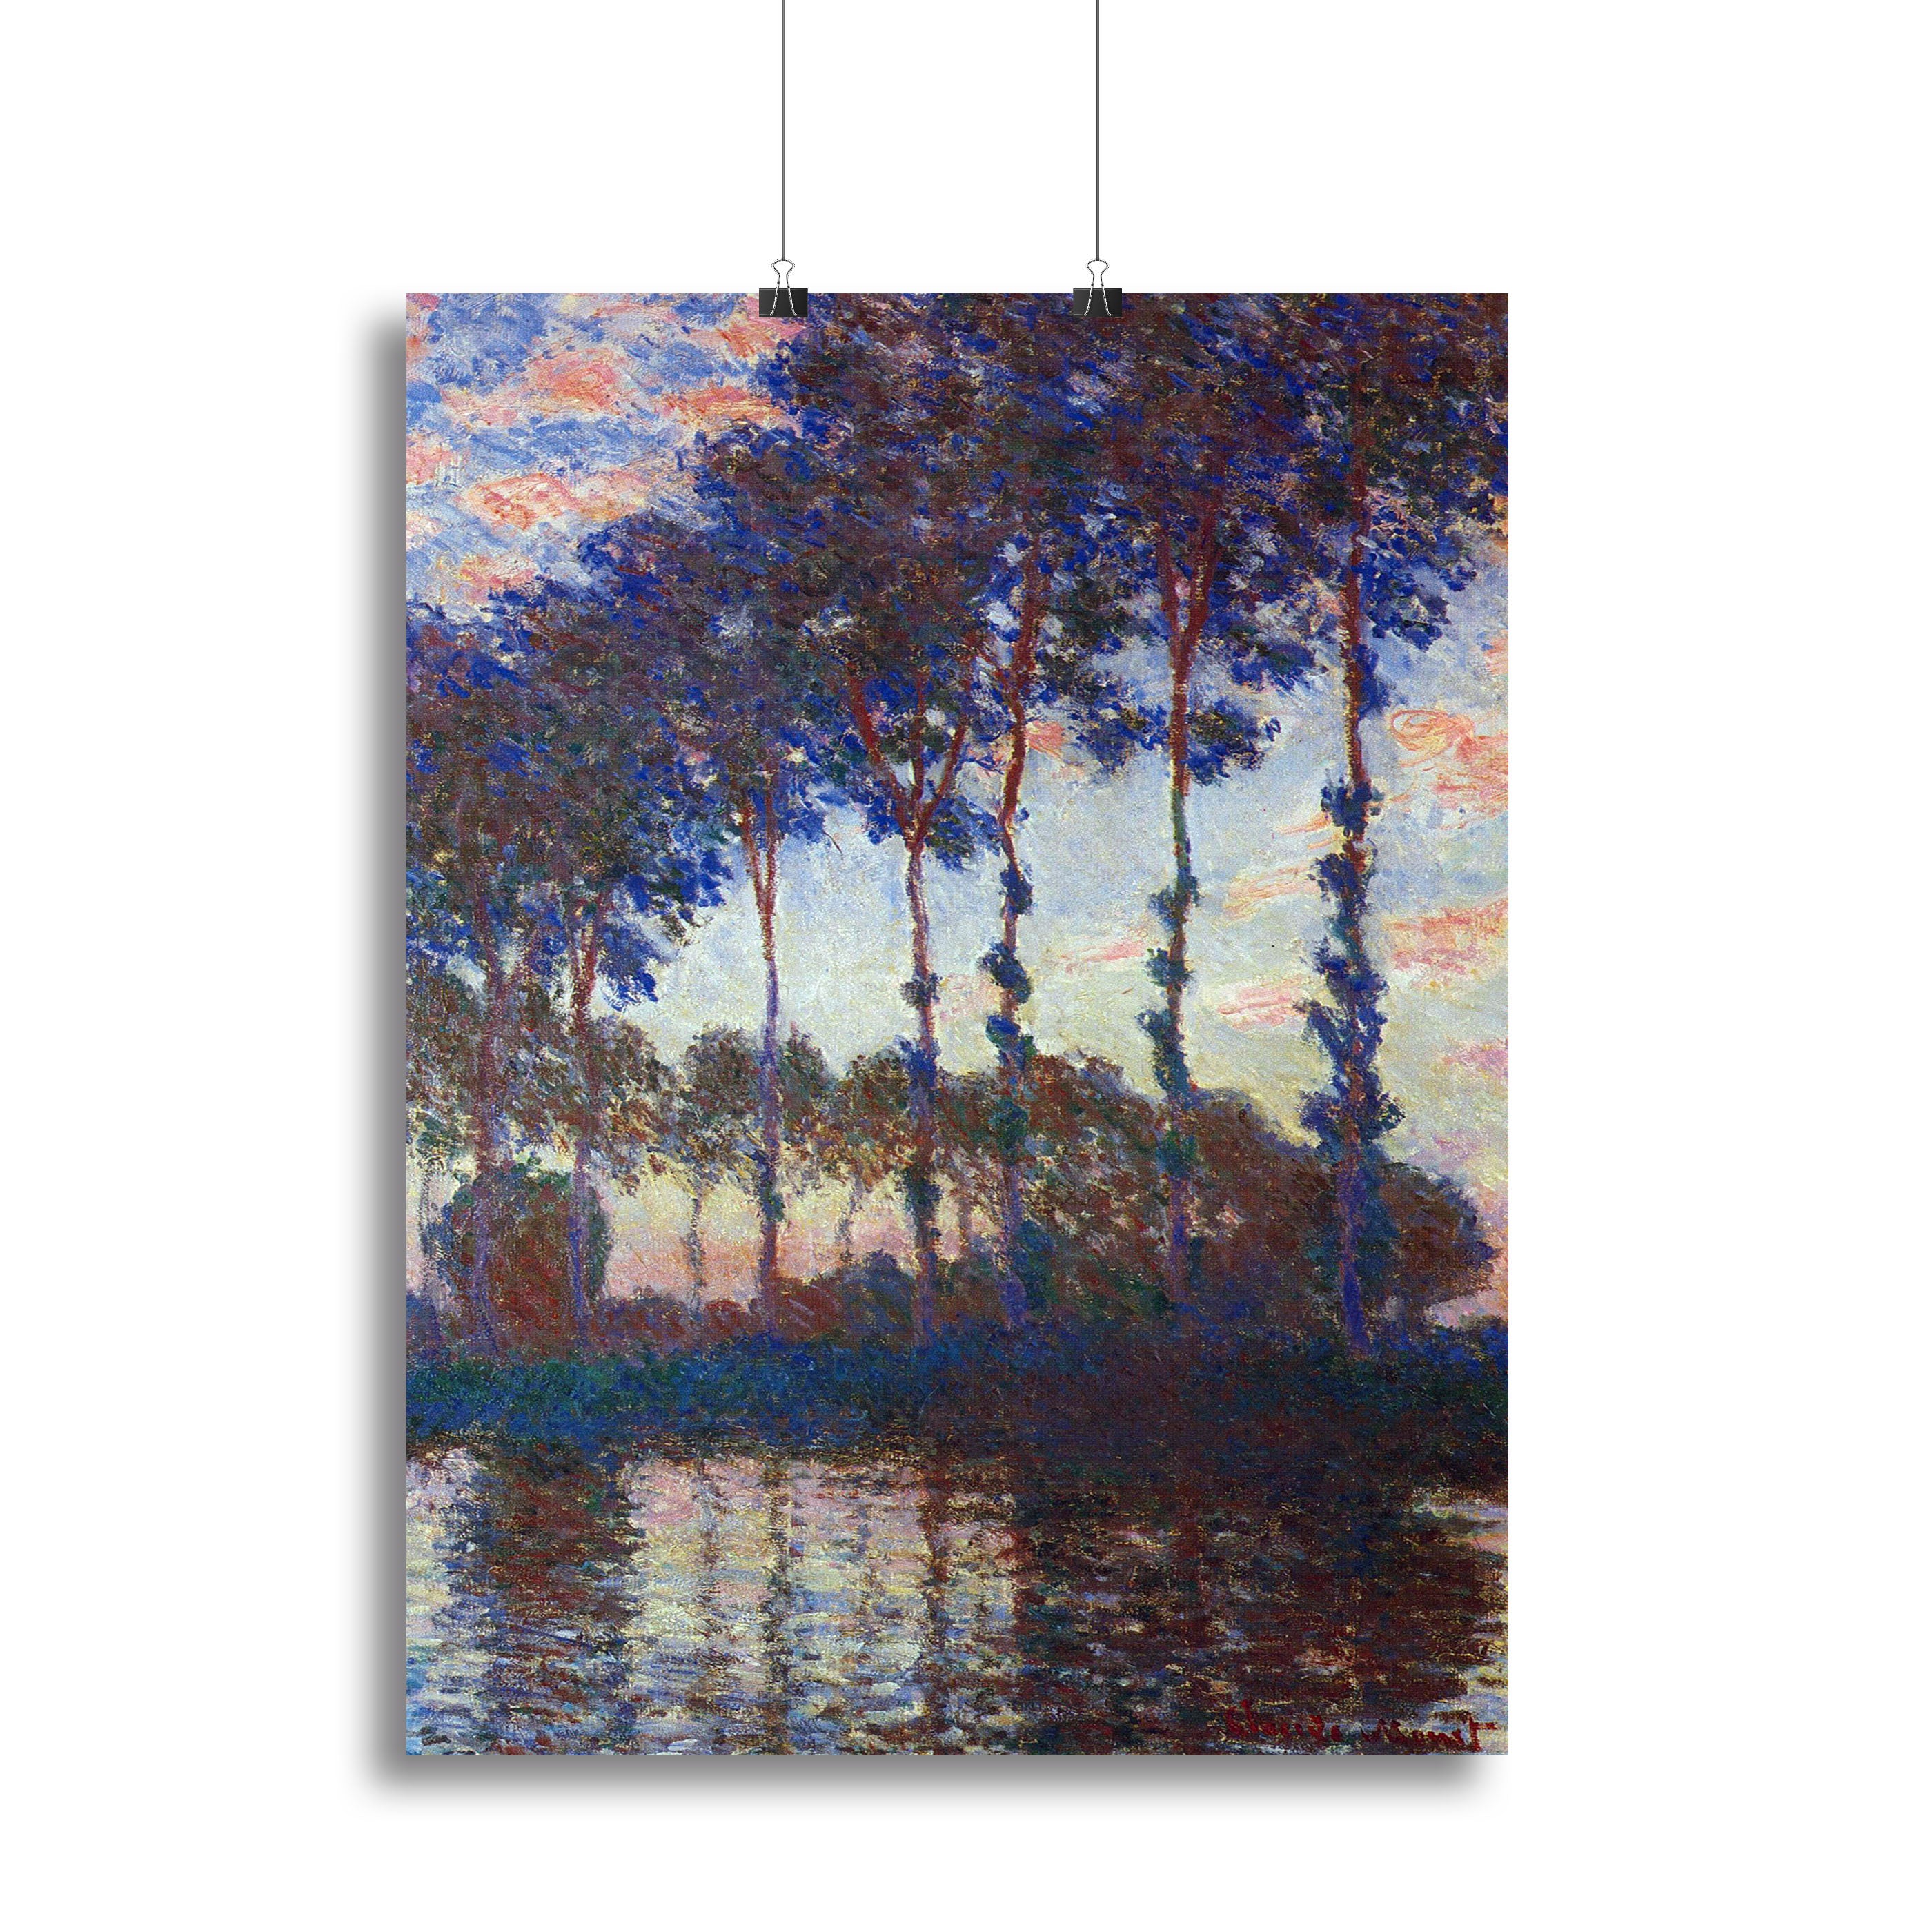 Poplars sunset by Monet Canvas Print or Poster - Canvas Art Rocks - 2